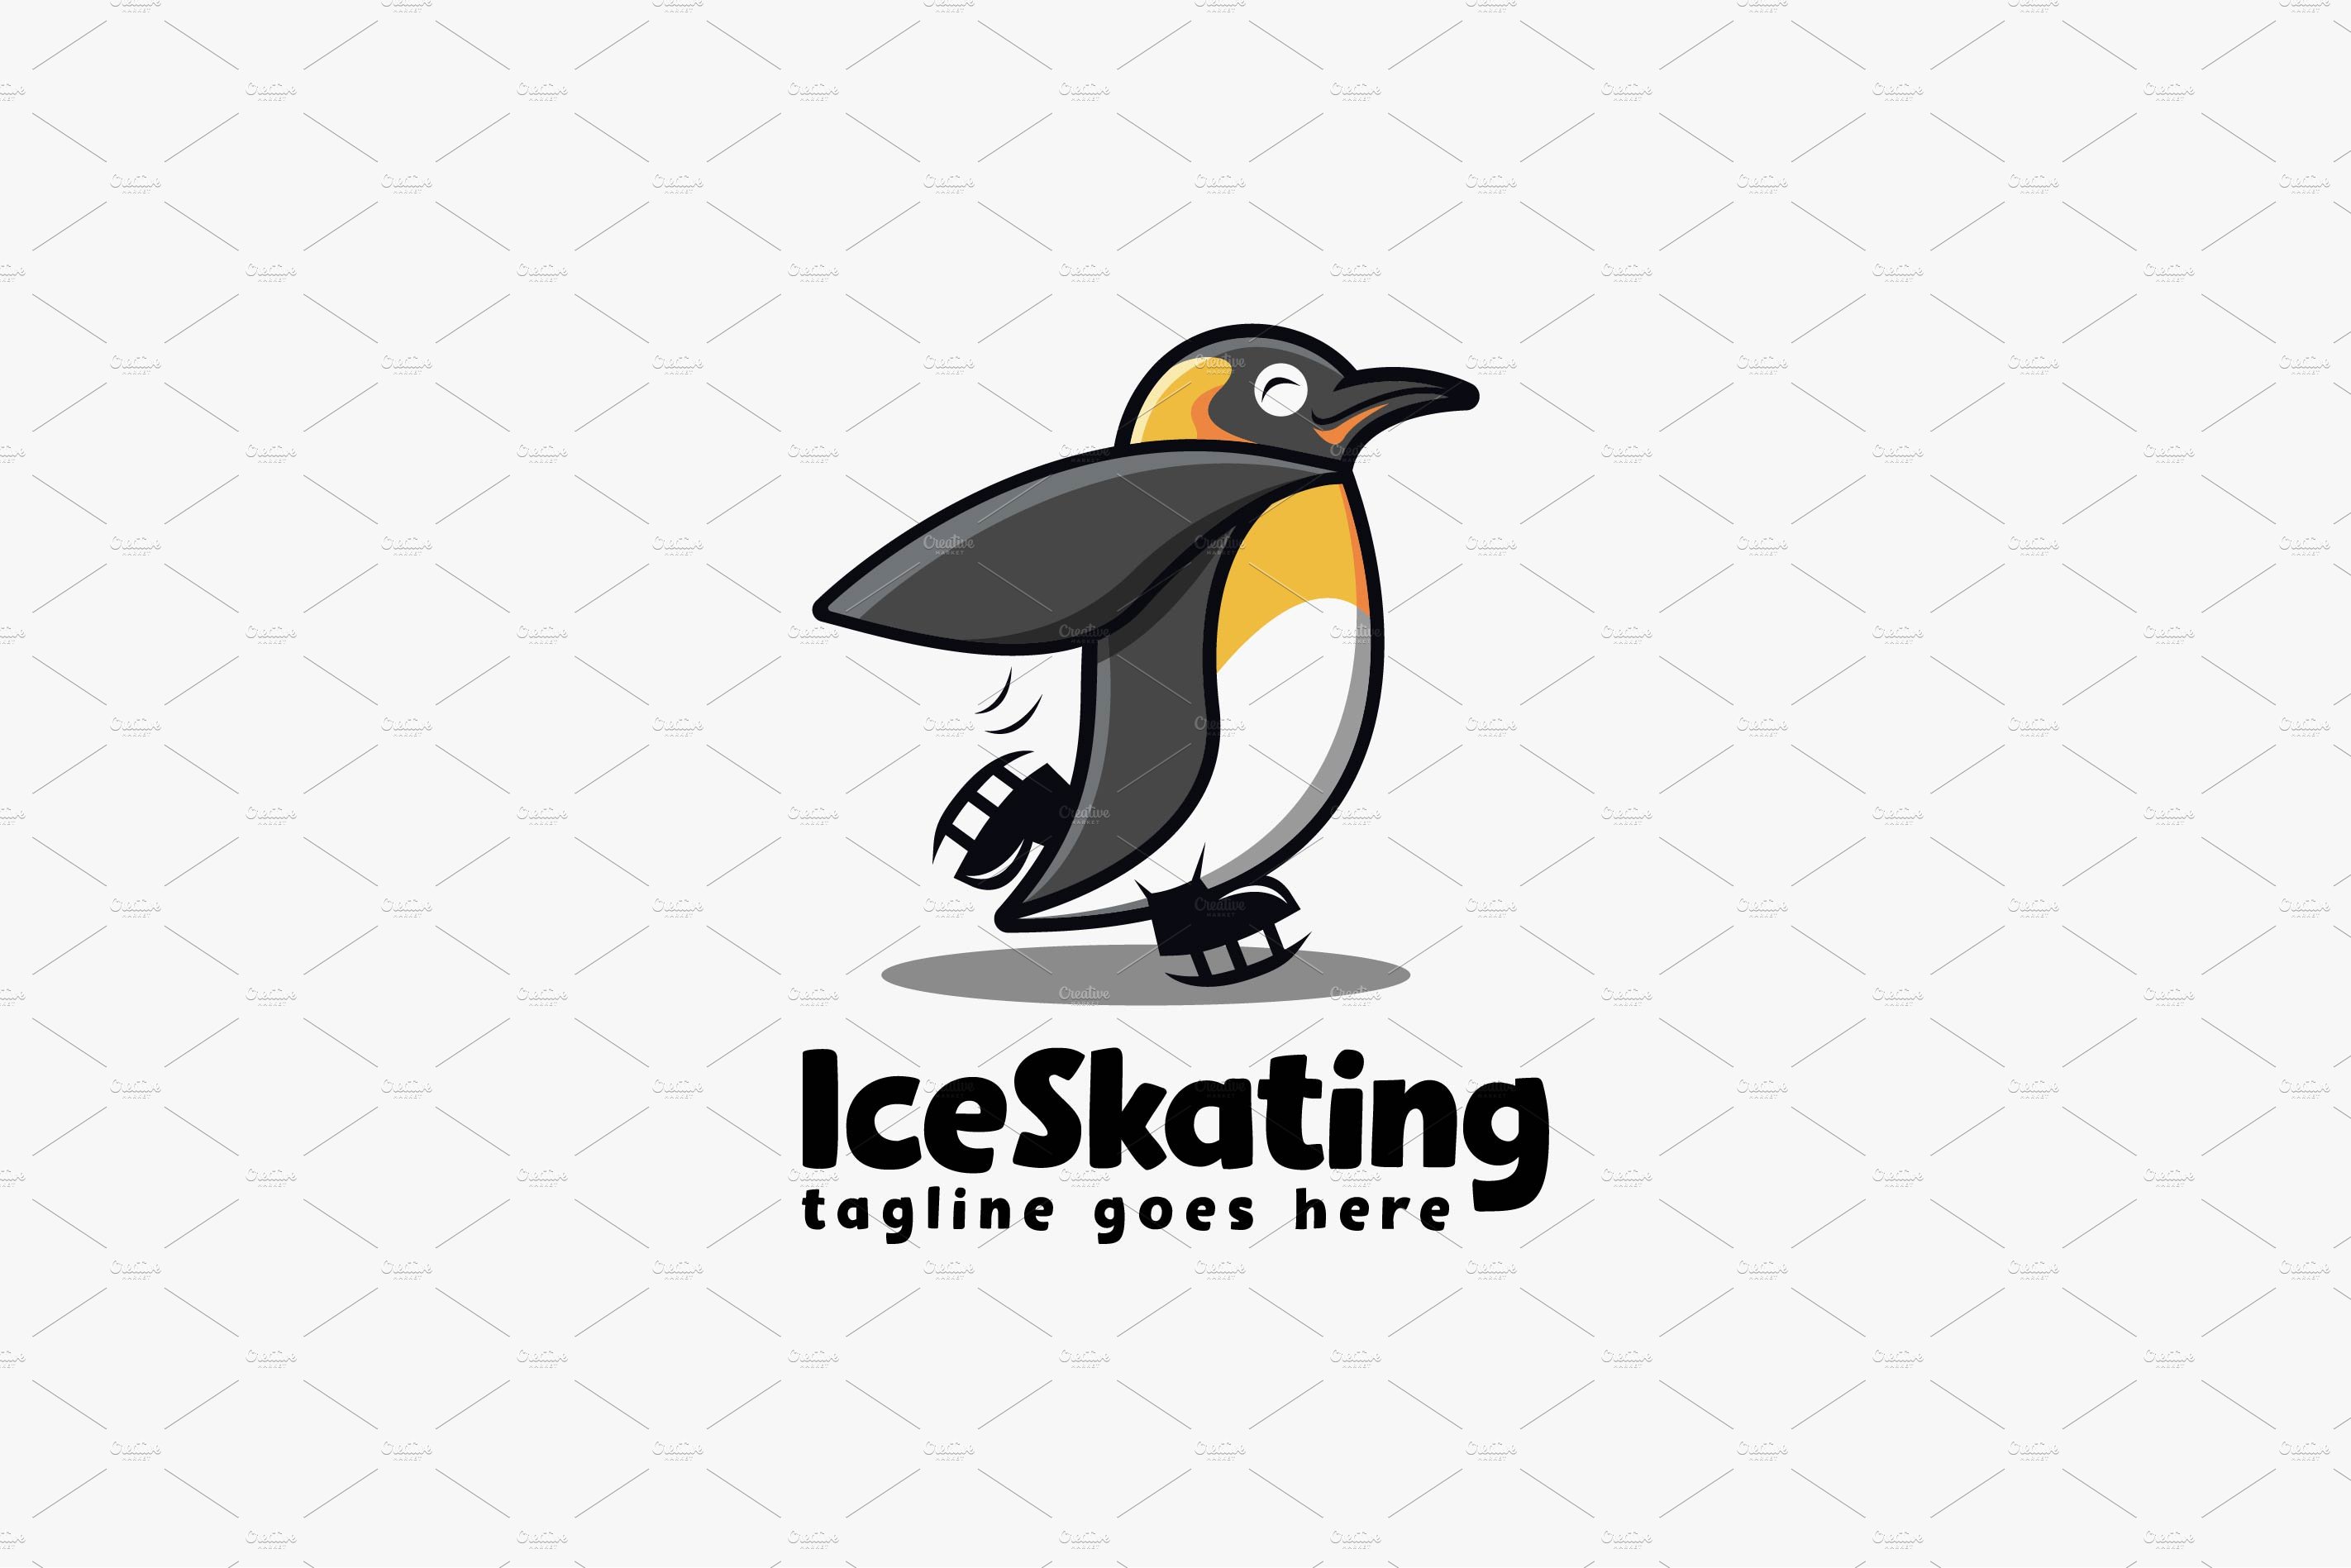 Fun penguin skating mascot logo cover image.